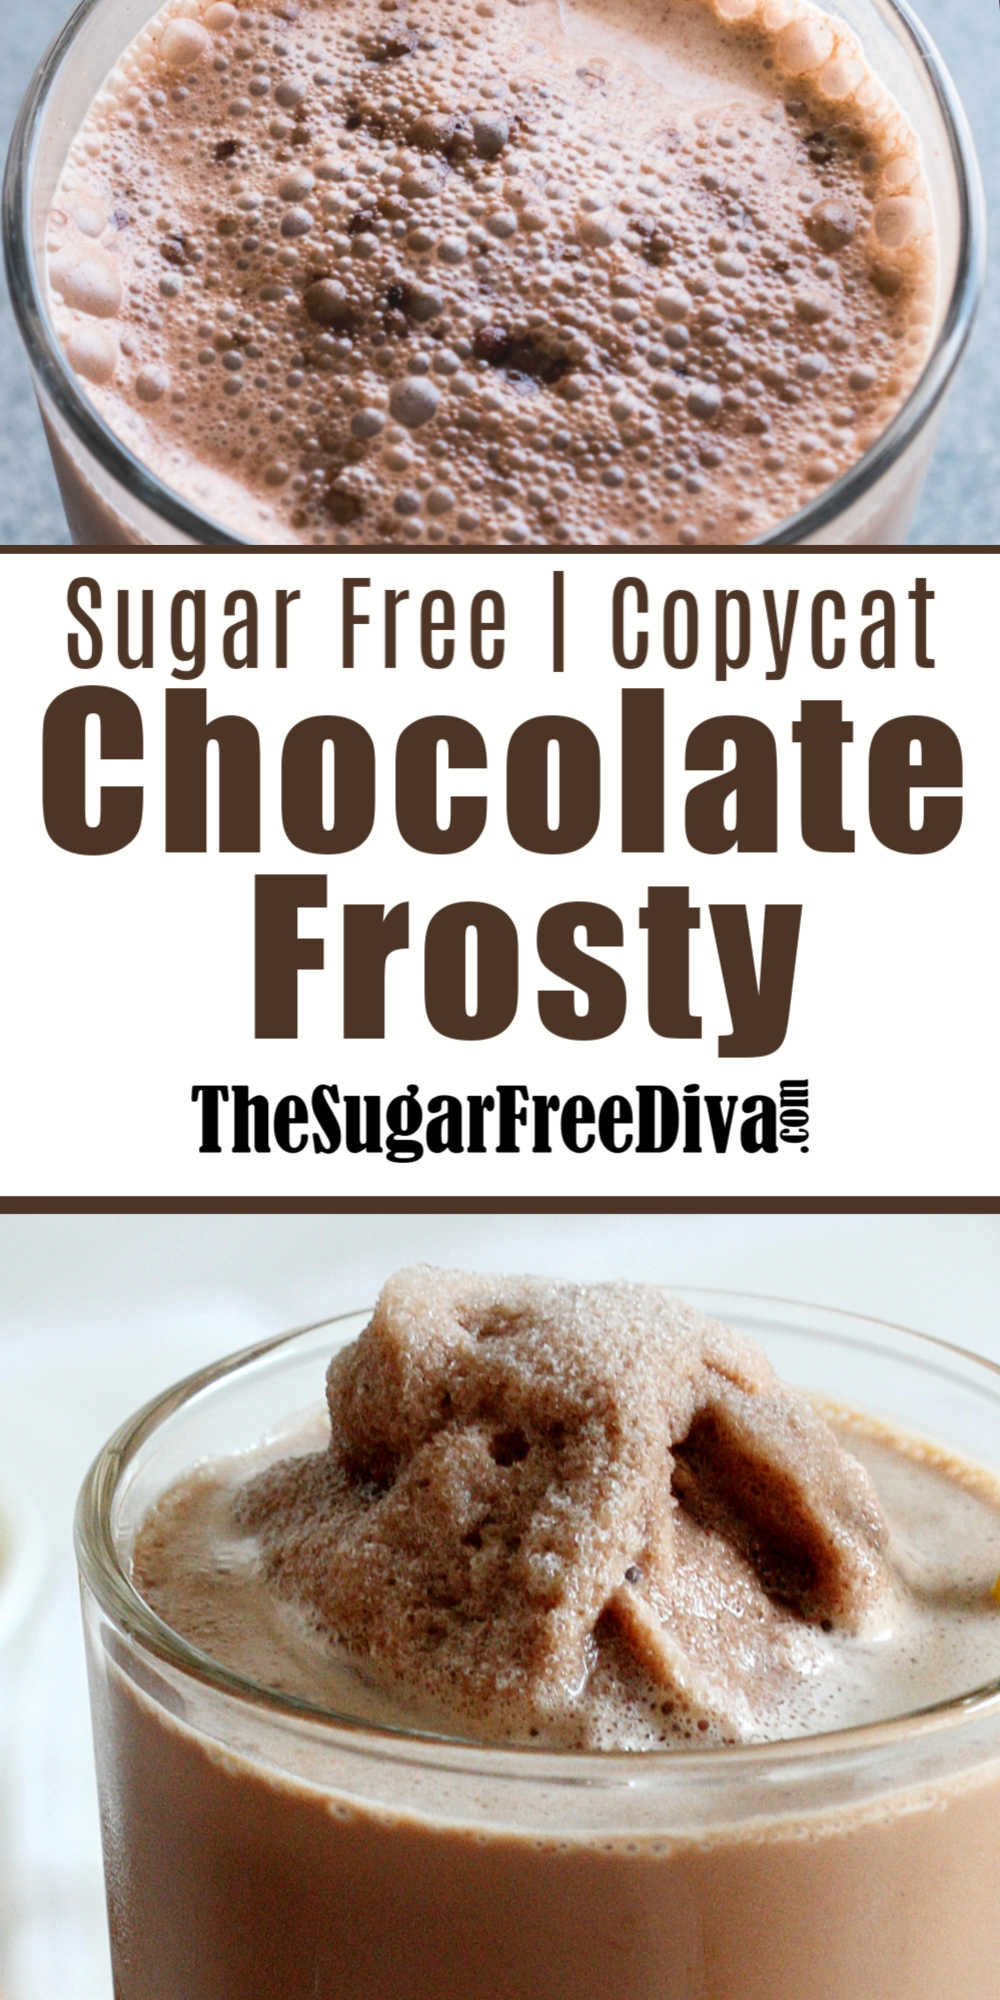 Sugar Free Copycat Frosty Recipe